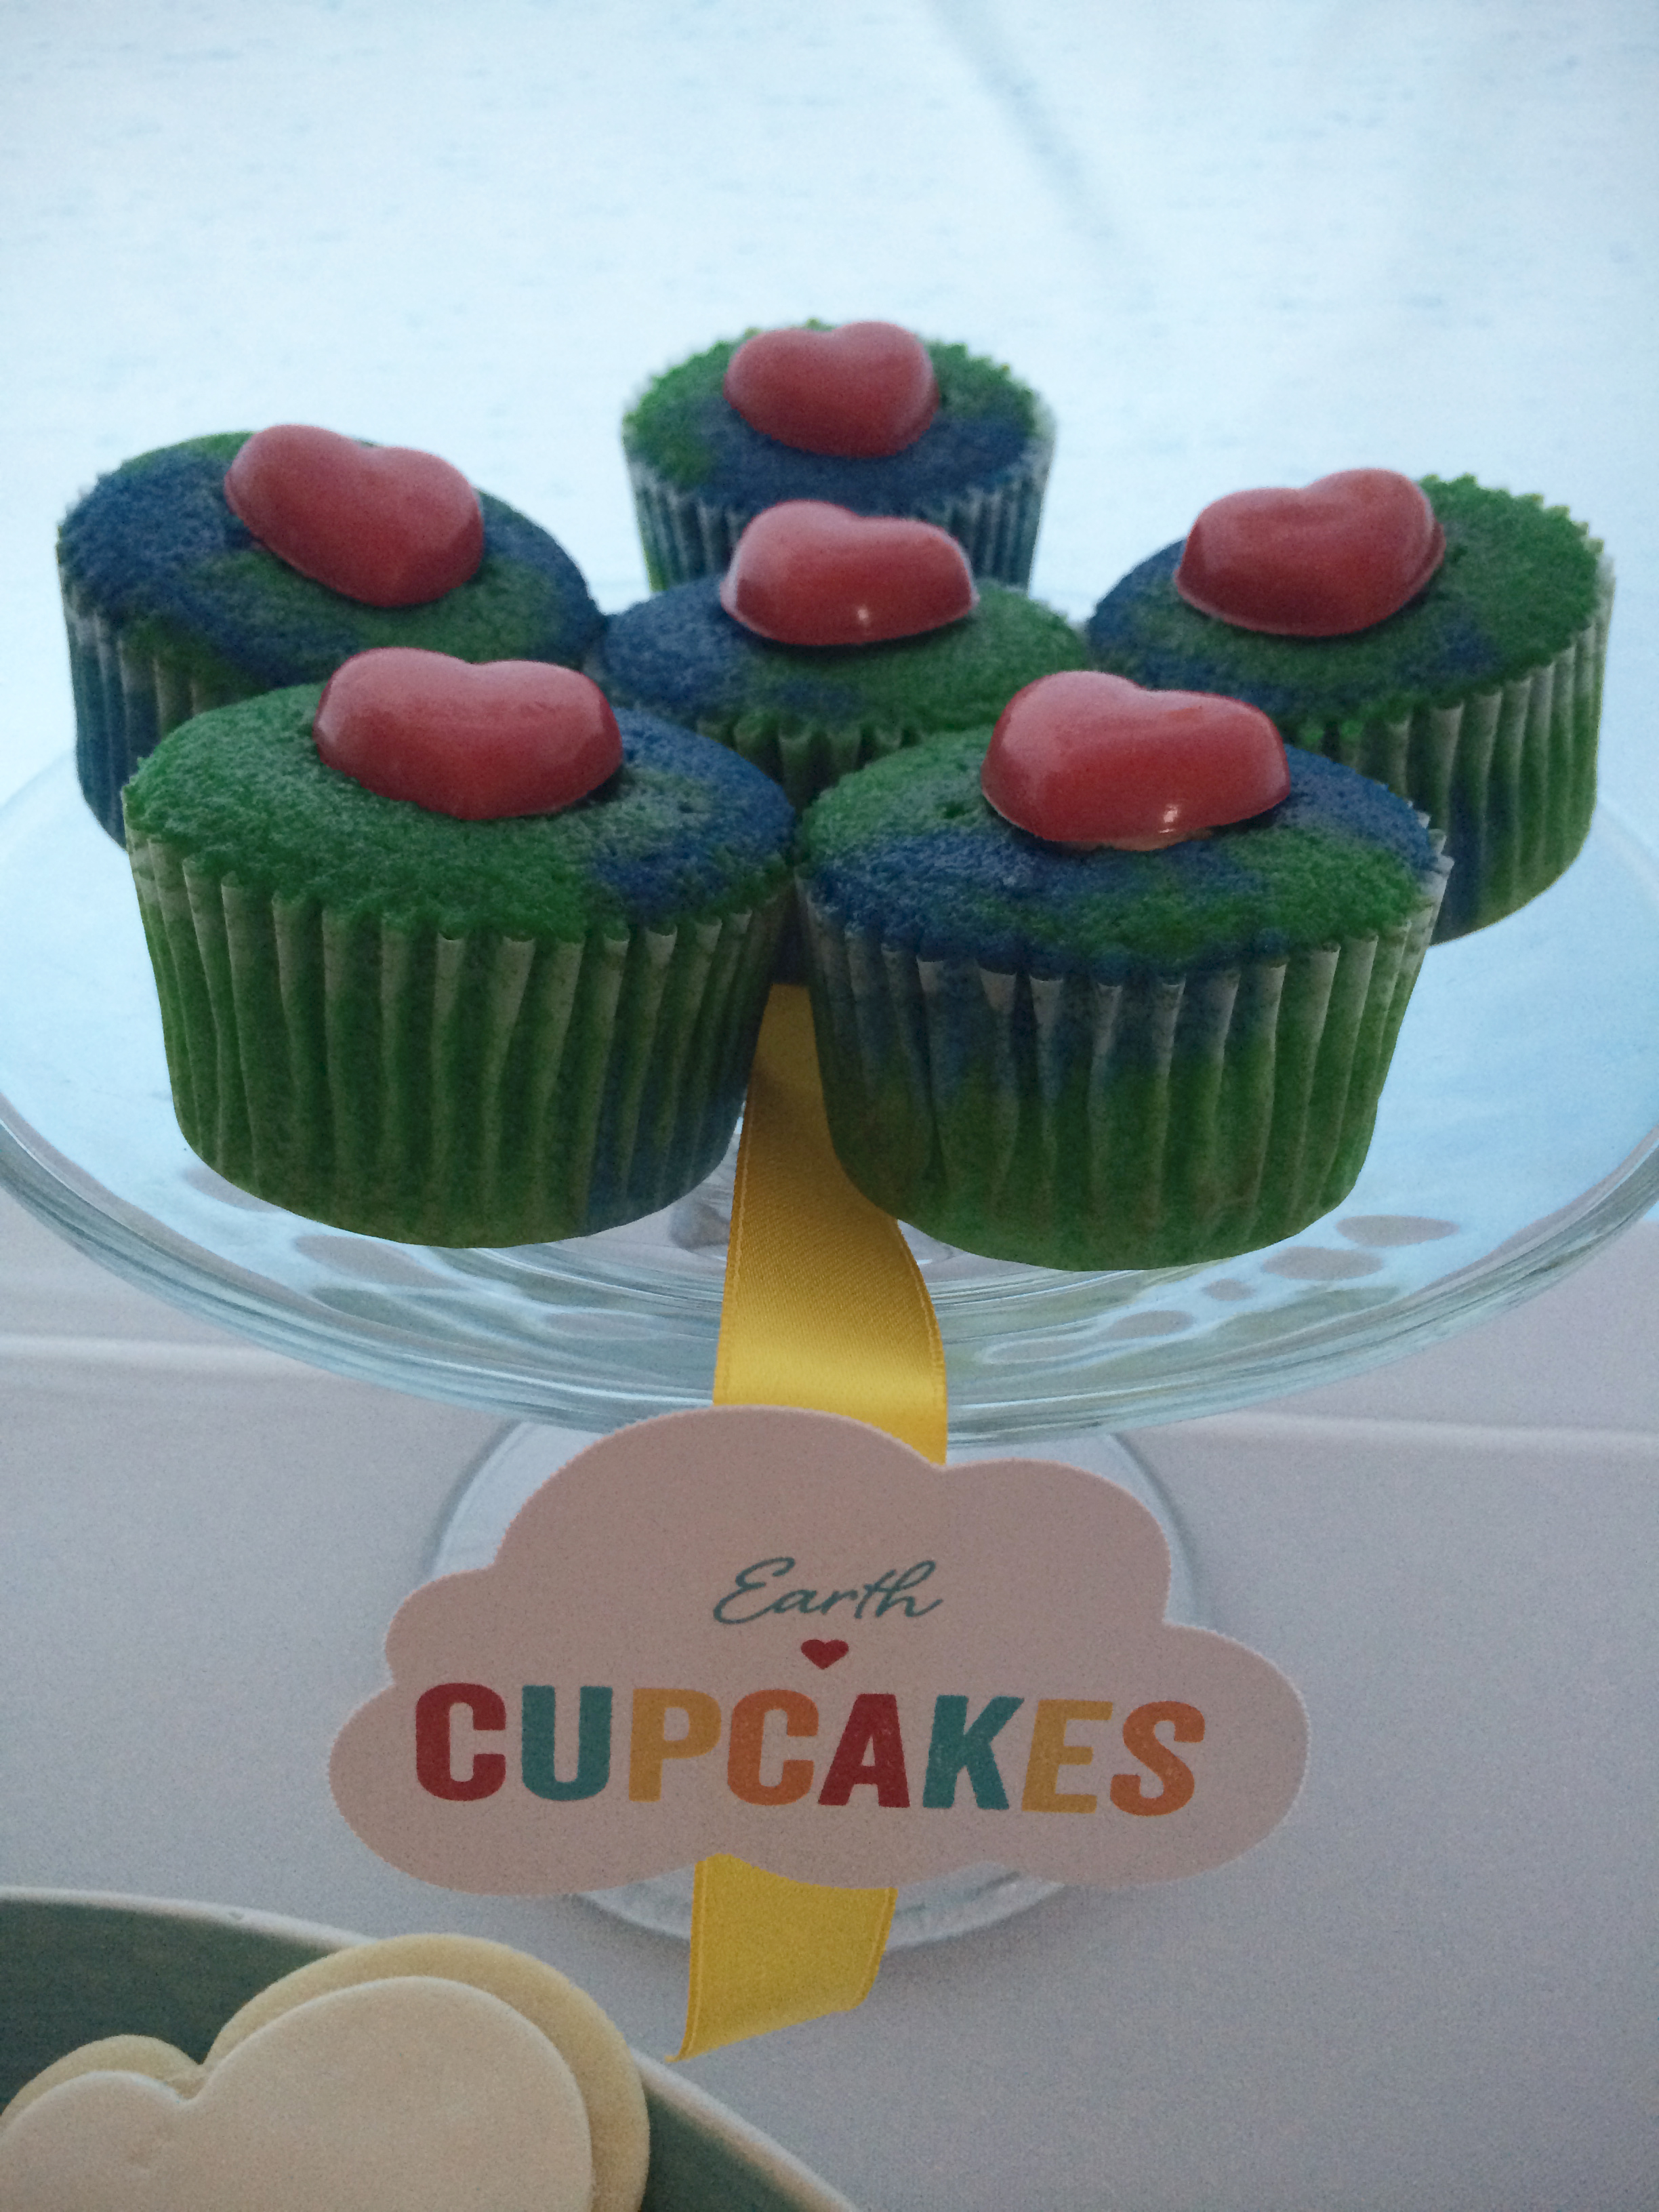 Earth Cupcakes